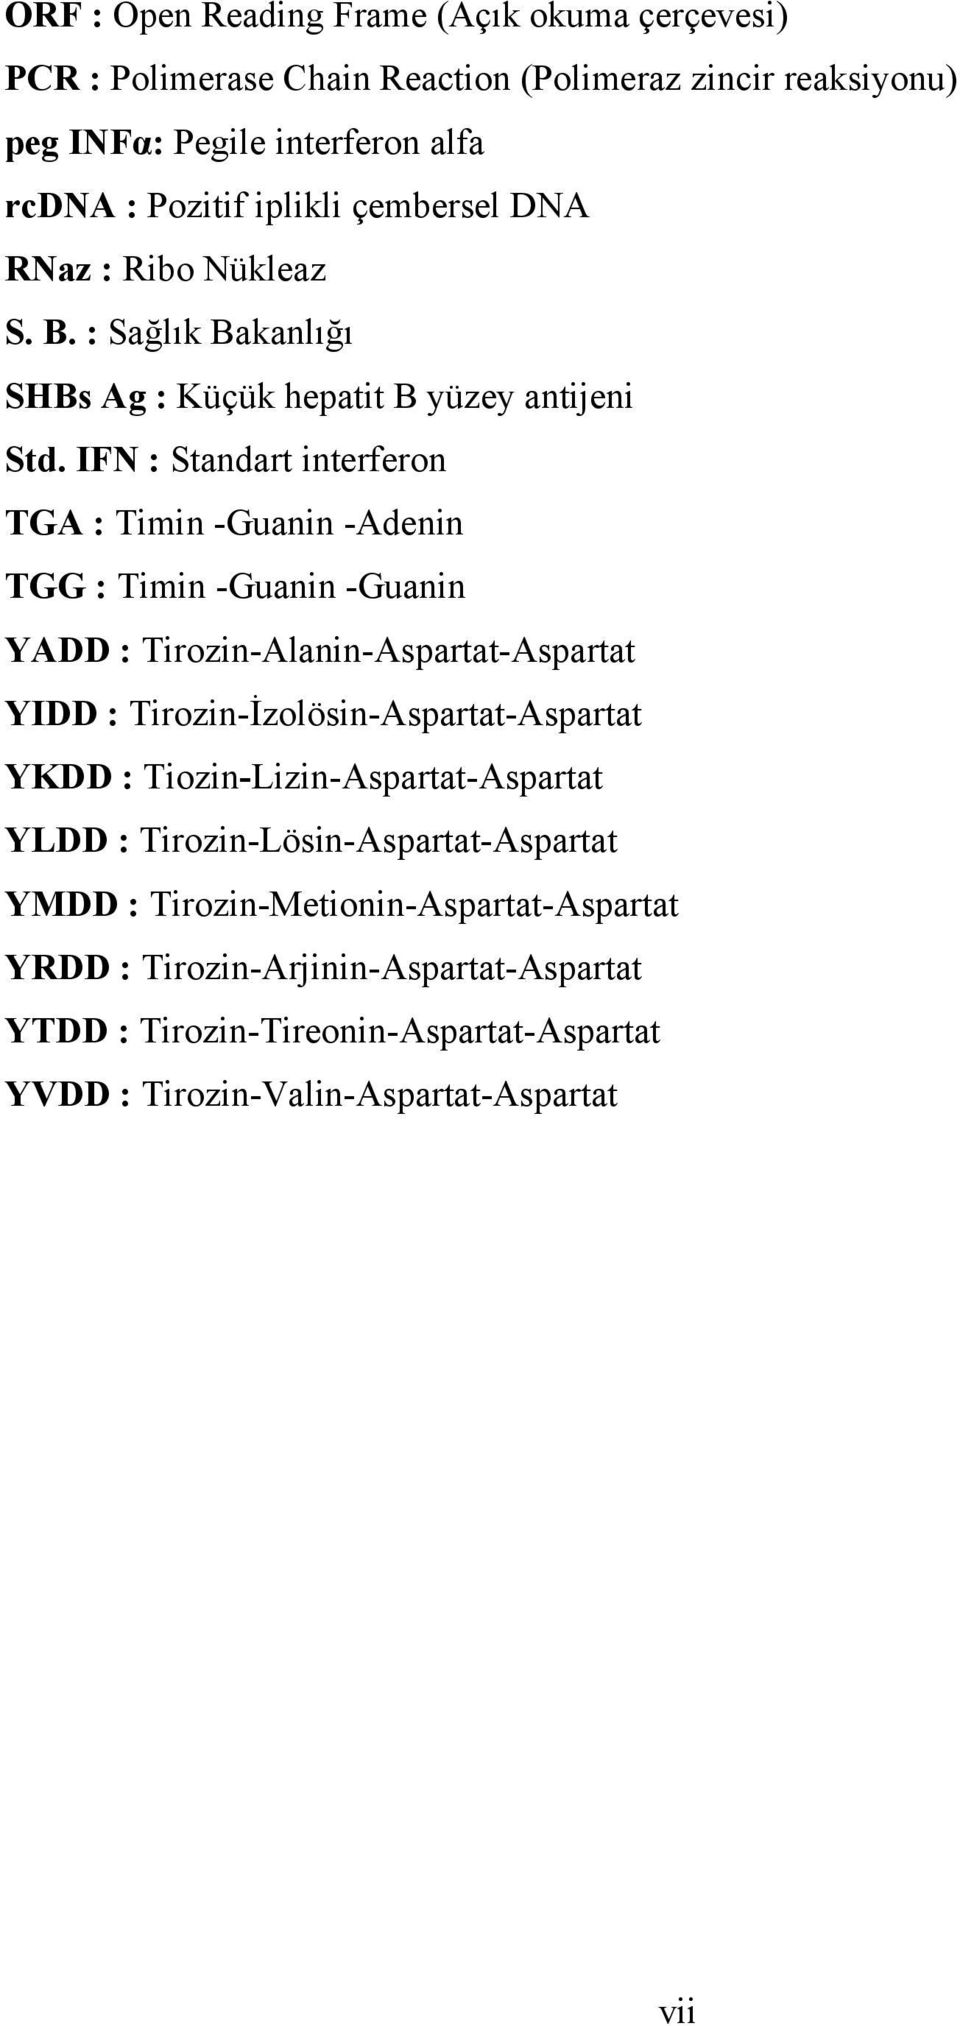 IFN : Standart interferon TGA : Timin -Guanin -Adenin TGG : Timin -Guanin -Guanin YADD : Tirozin-Alanin-Aspartat-Aspartat YIDD : Tirozin-İzolösin-Aspartat-Aspartat YKDD